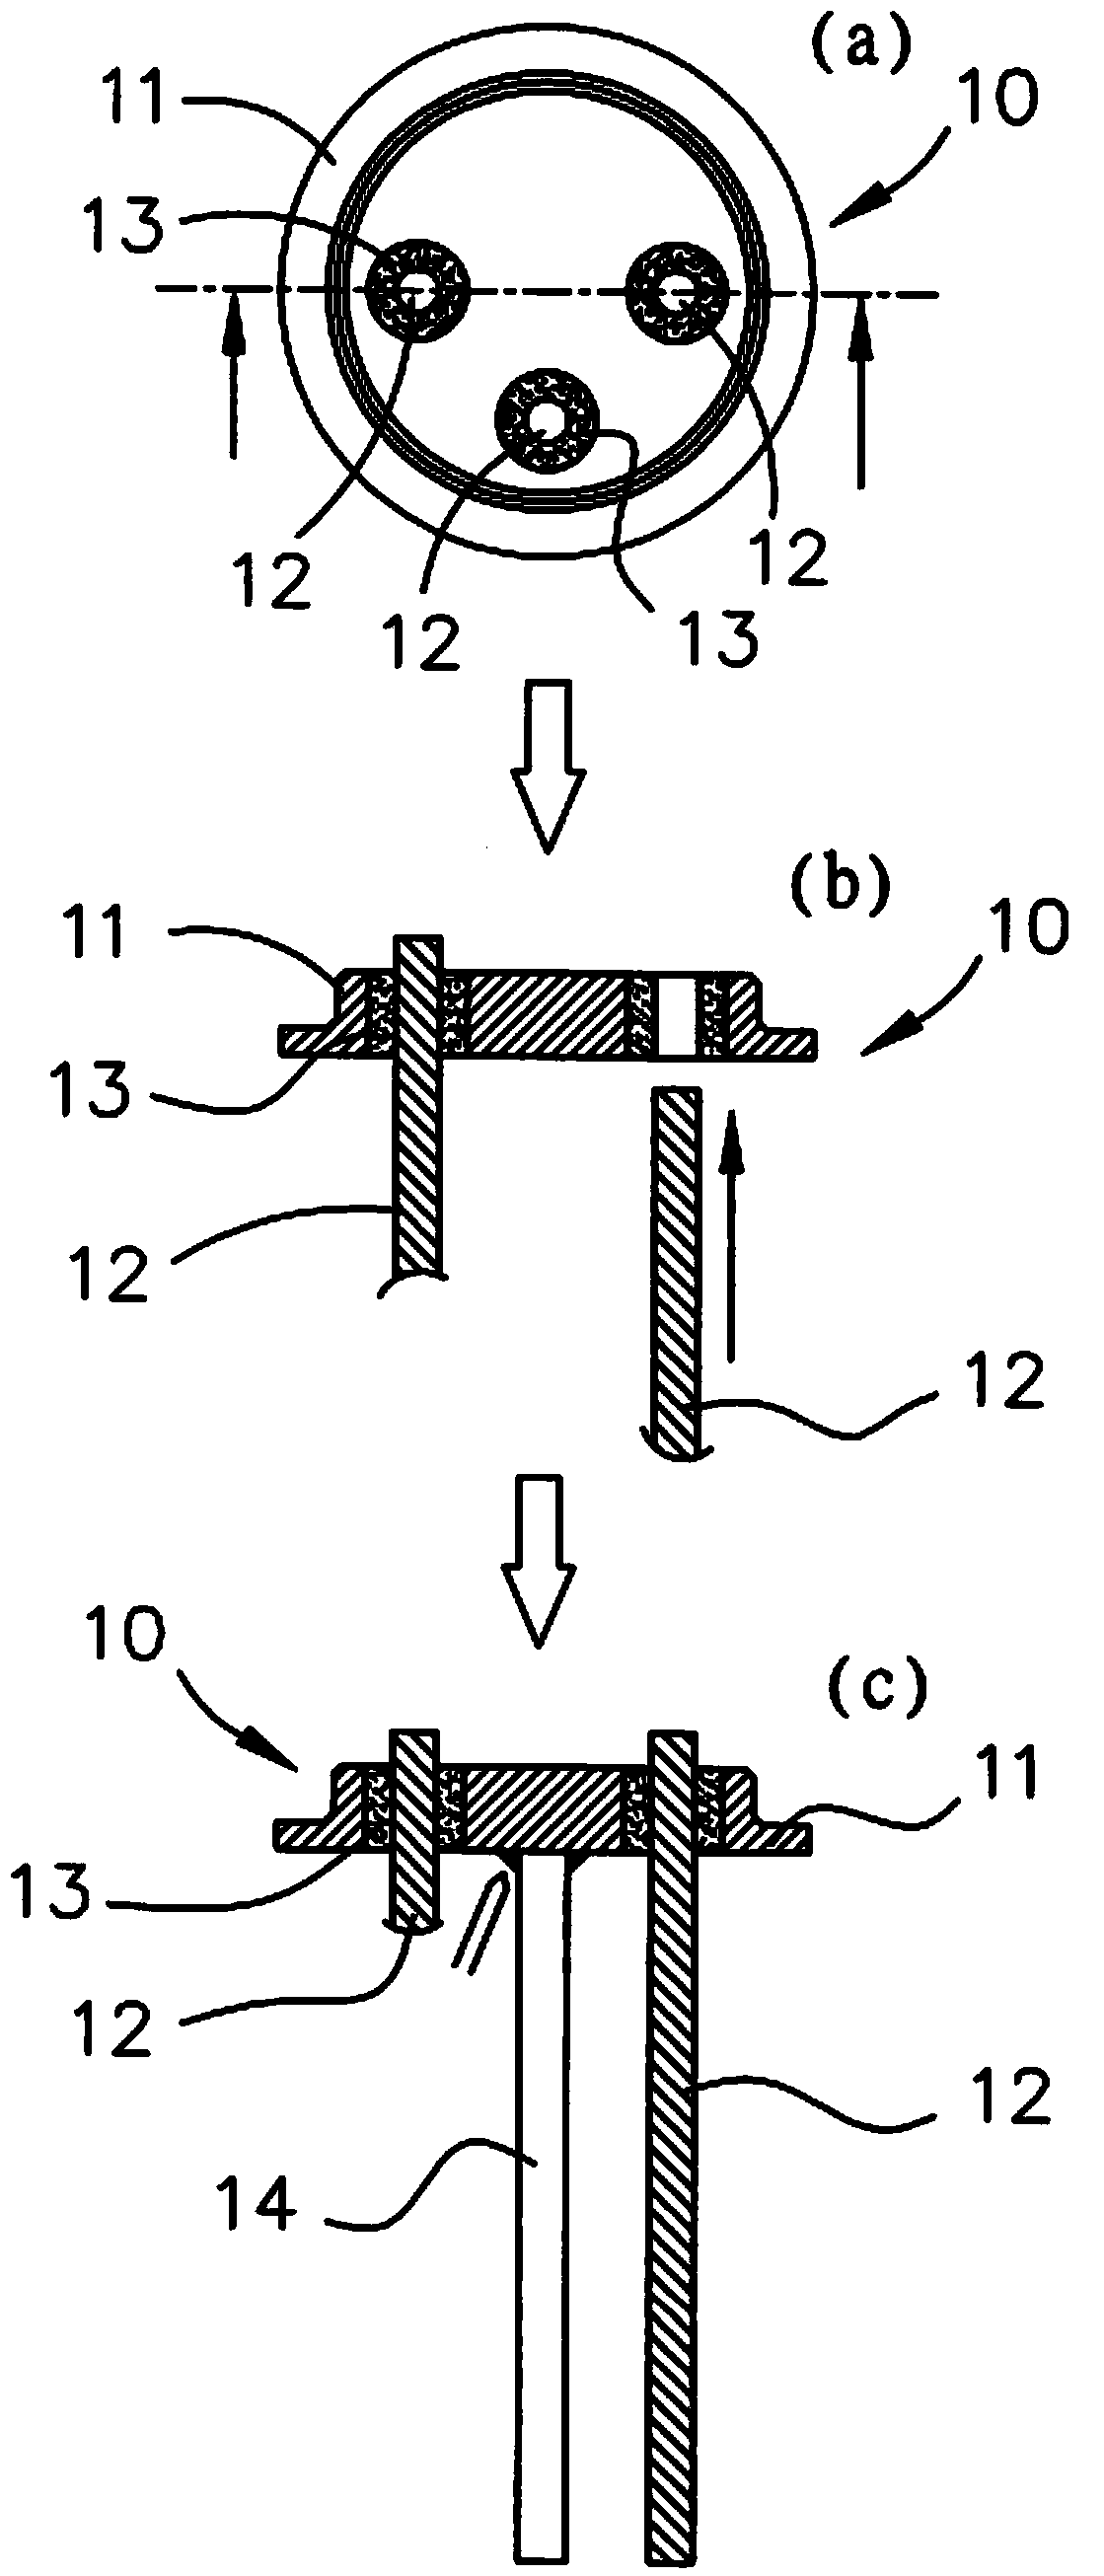 Fabricating method for photoelectric element base